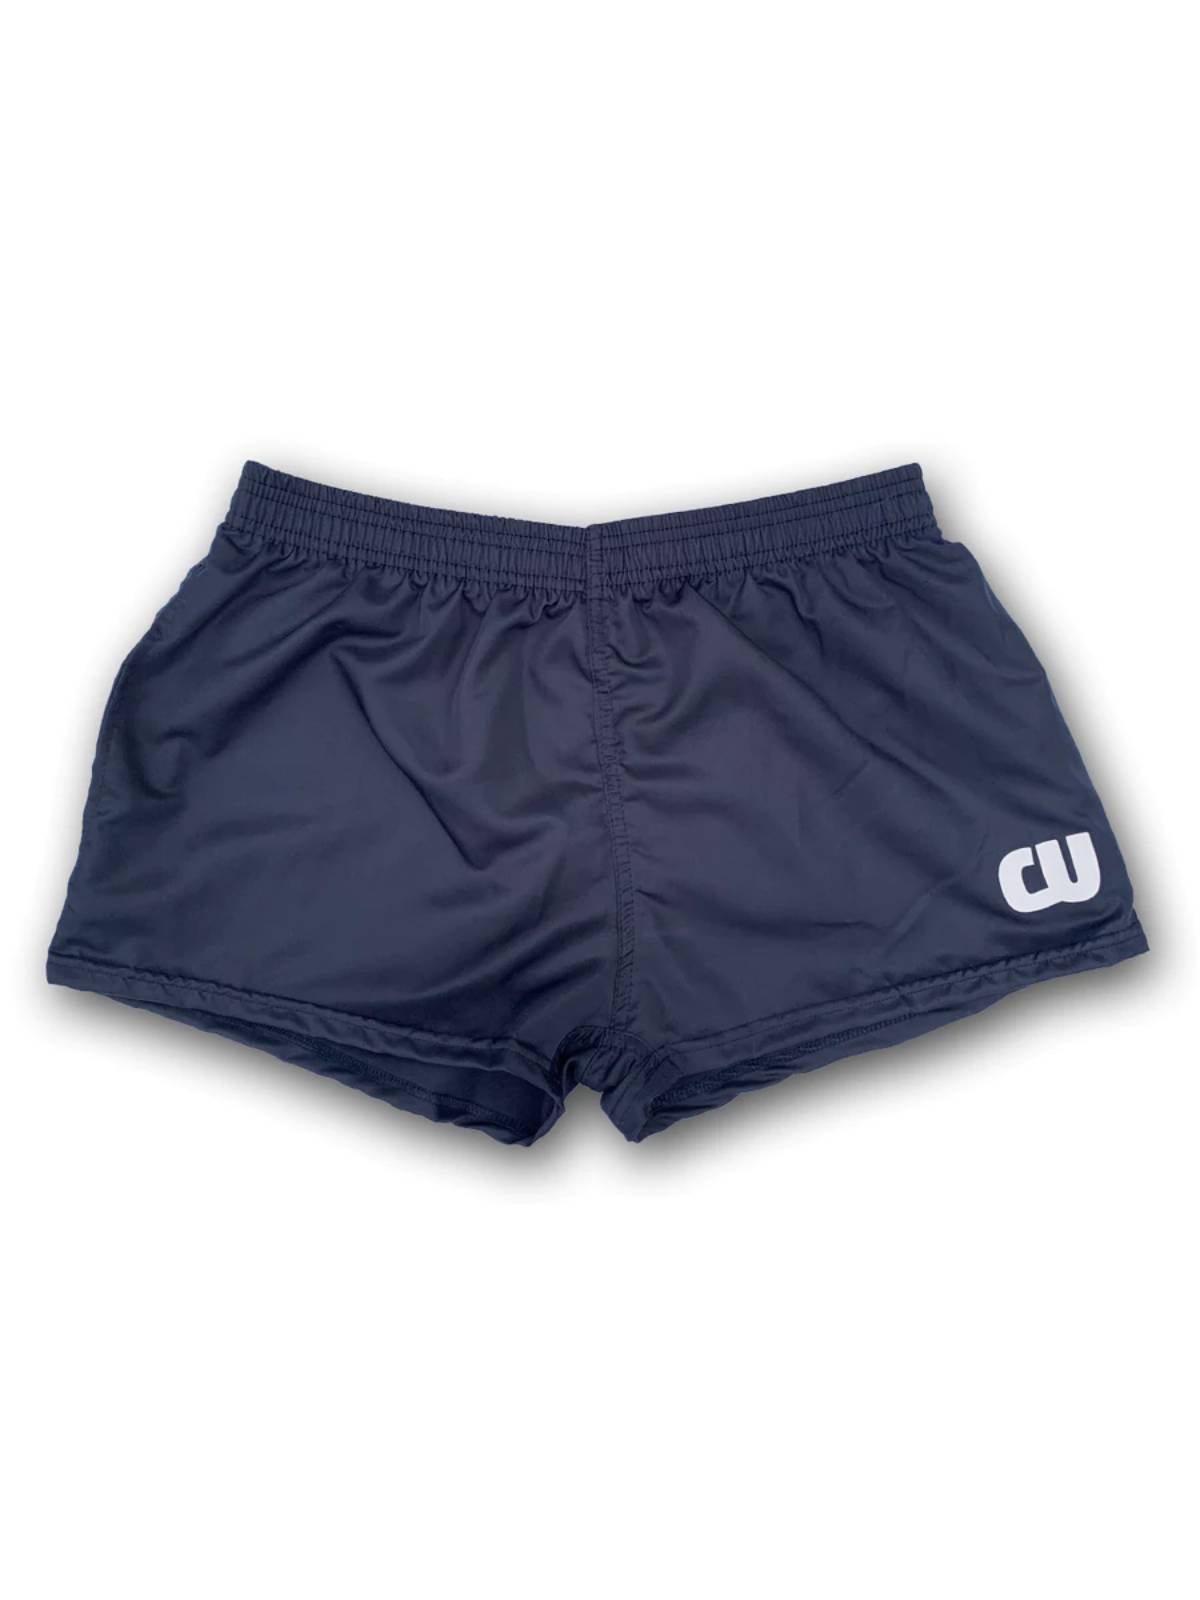 CURB 90s Shorts | Navy